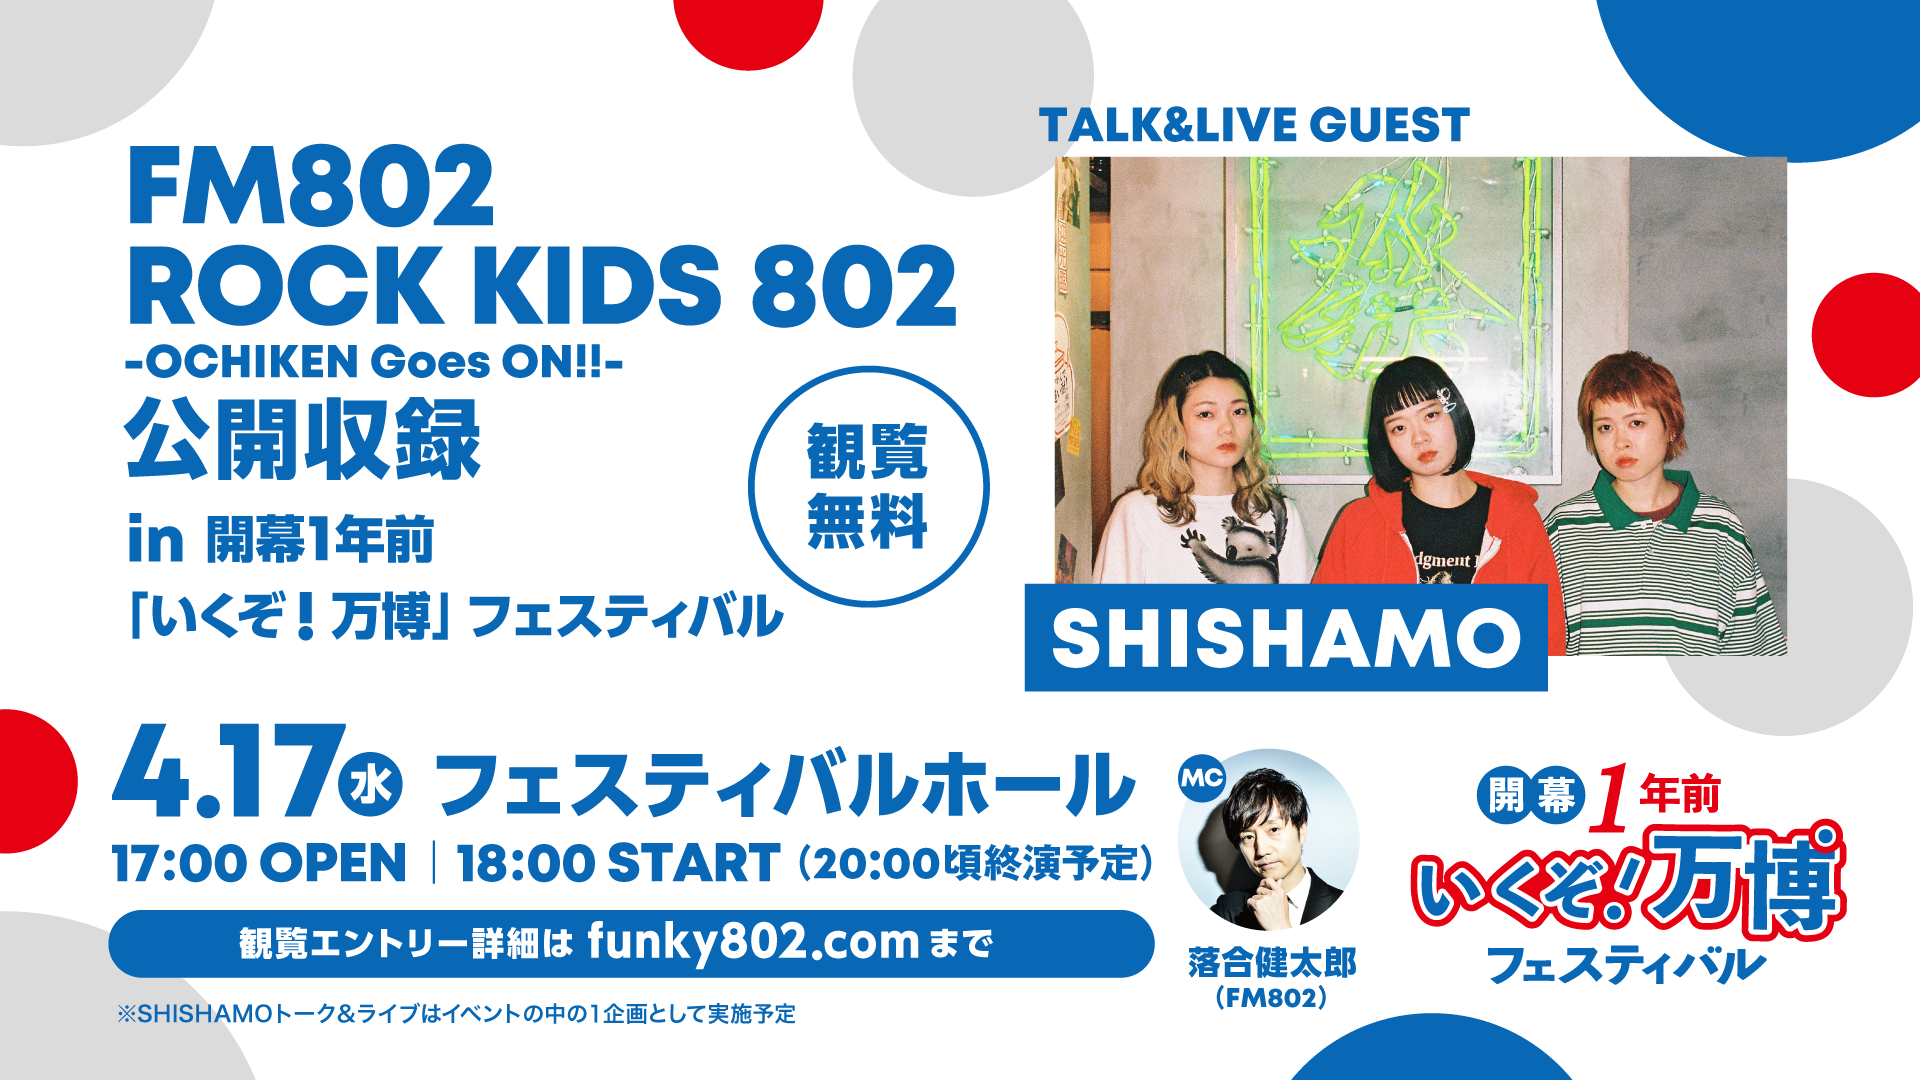 04.17(水)「FM802 ROCK KIDS 802-OCHIKEN Goes ON!!-公開収録 in 開幕1 